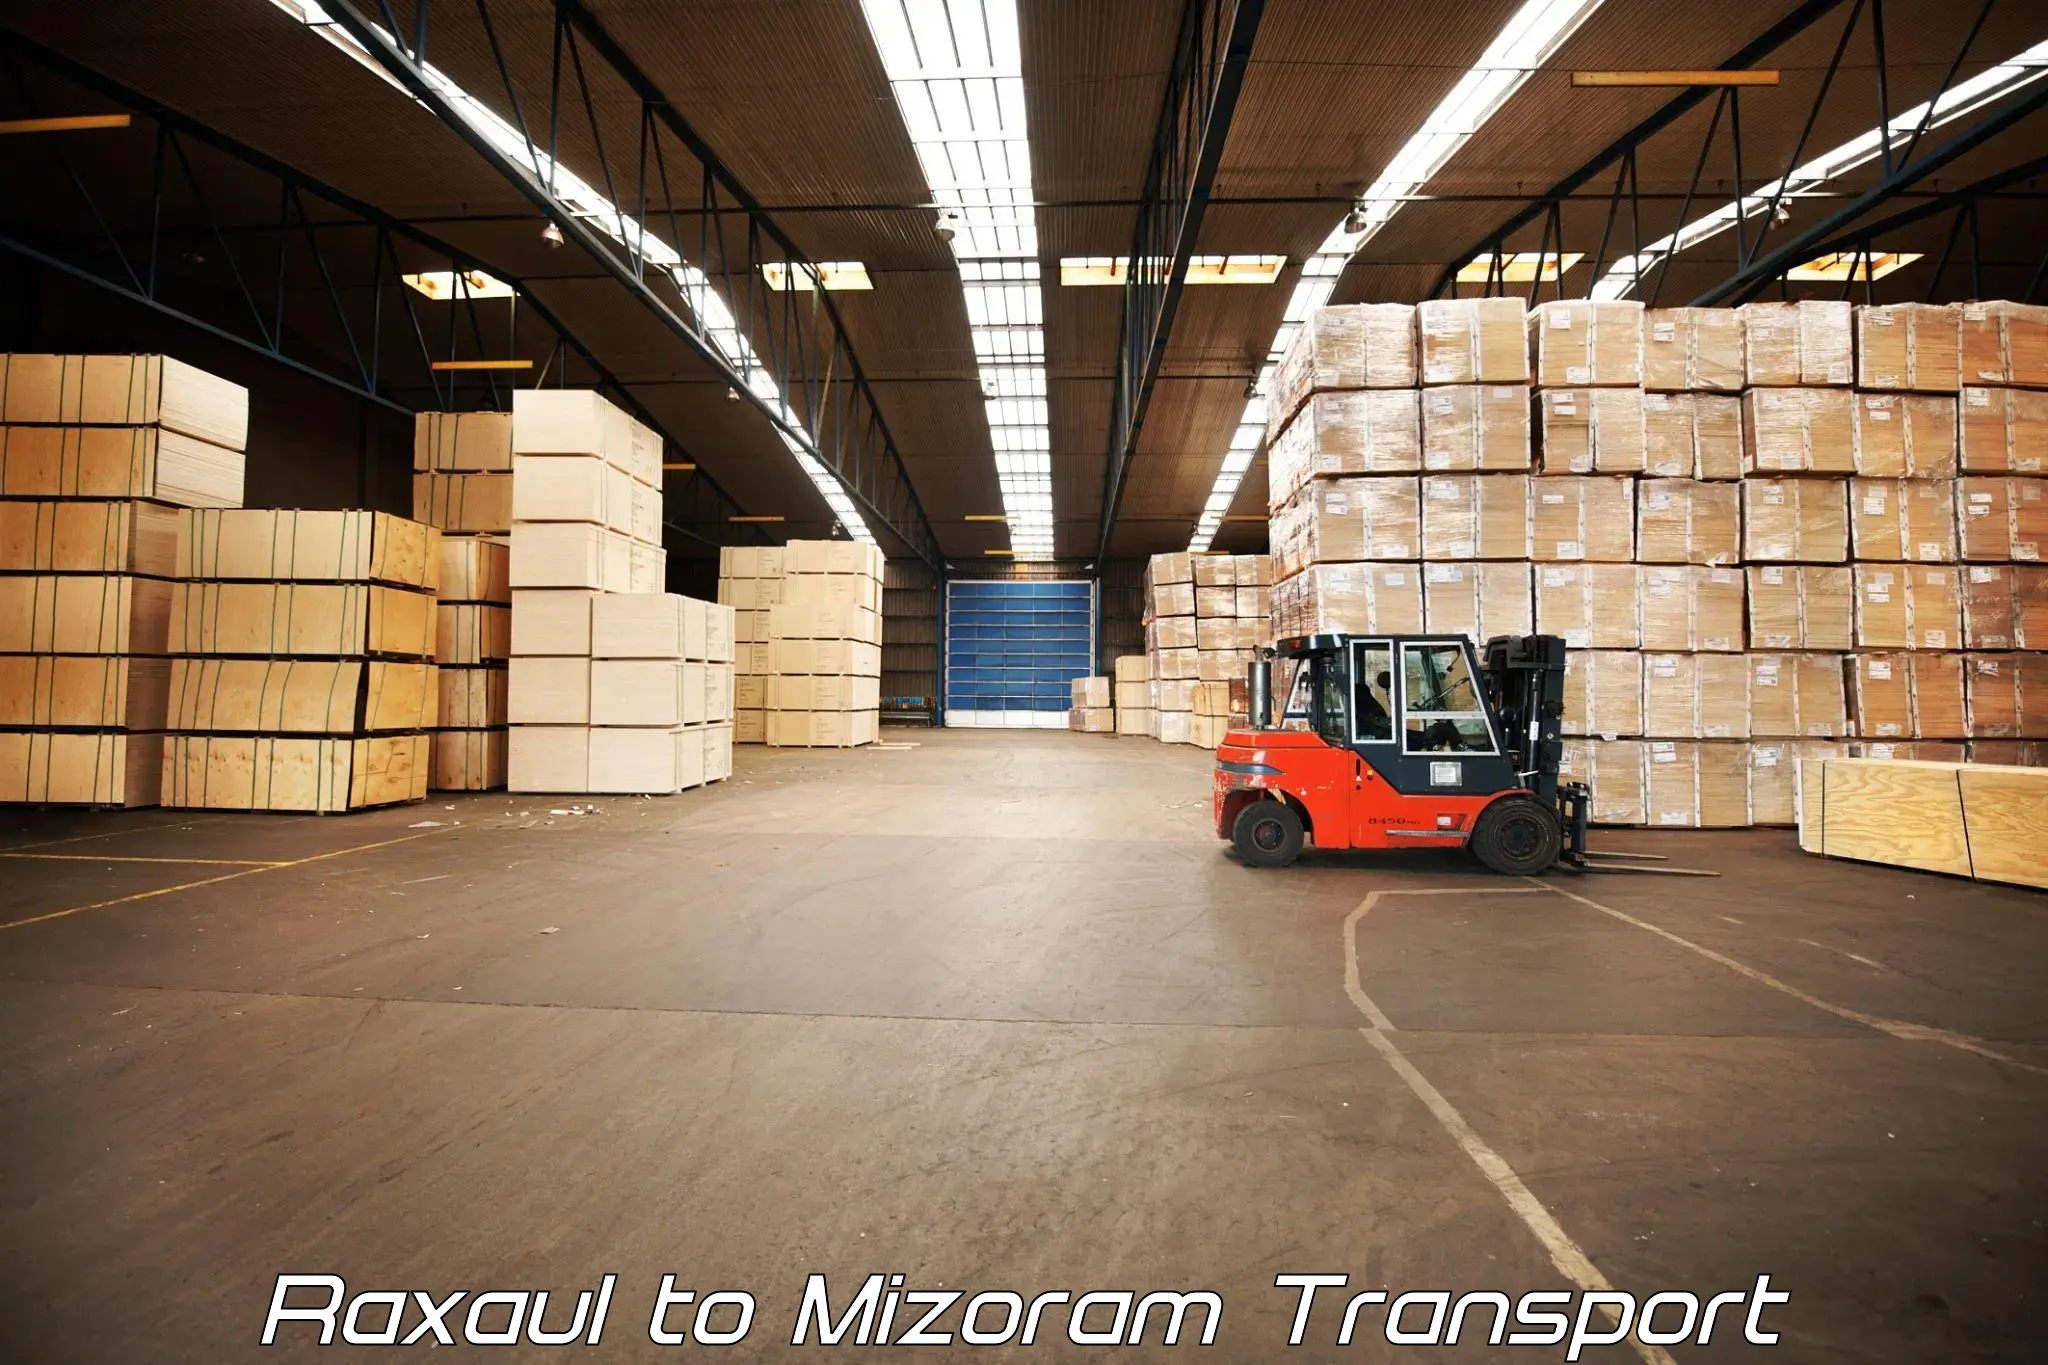 Delivery service Raxaul to Mizoram